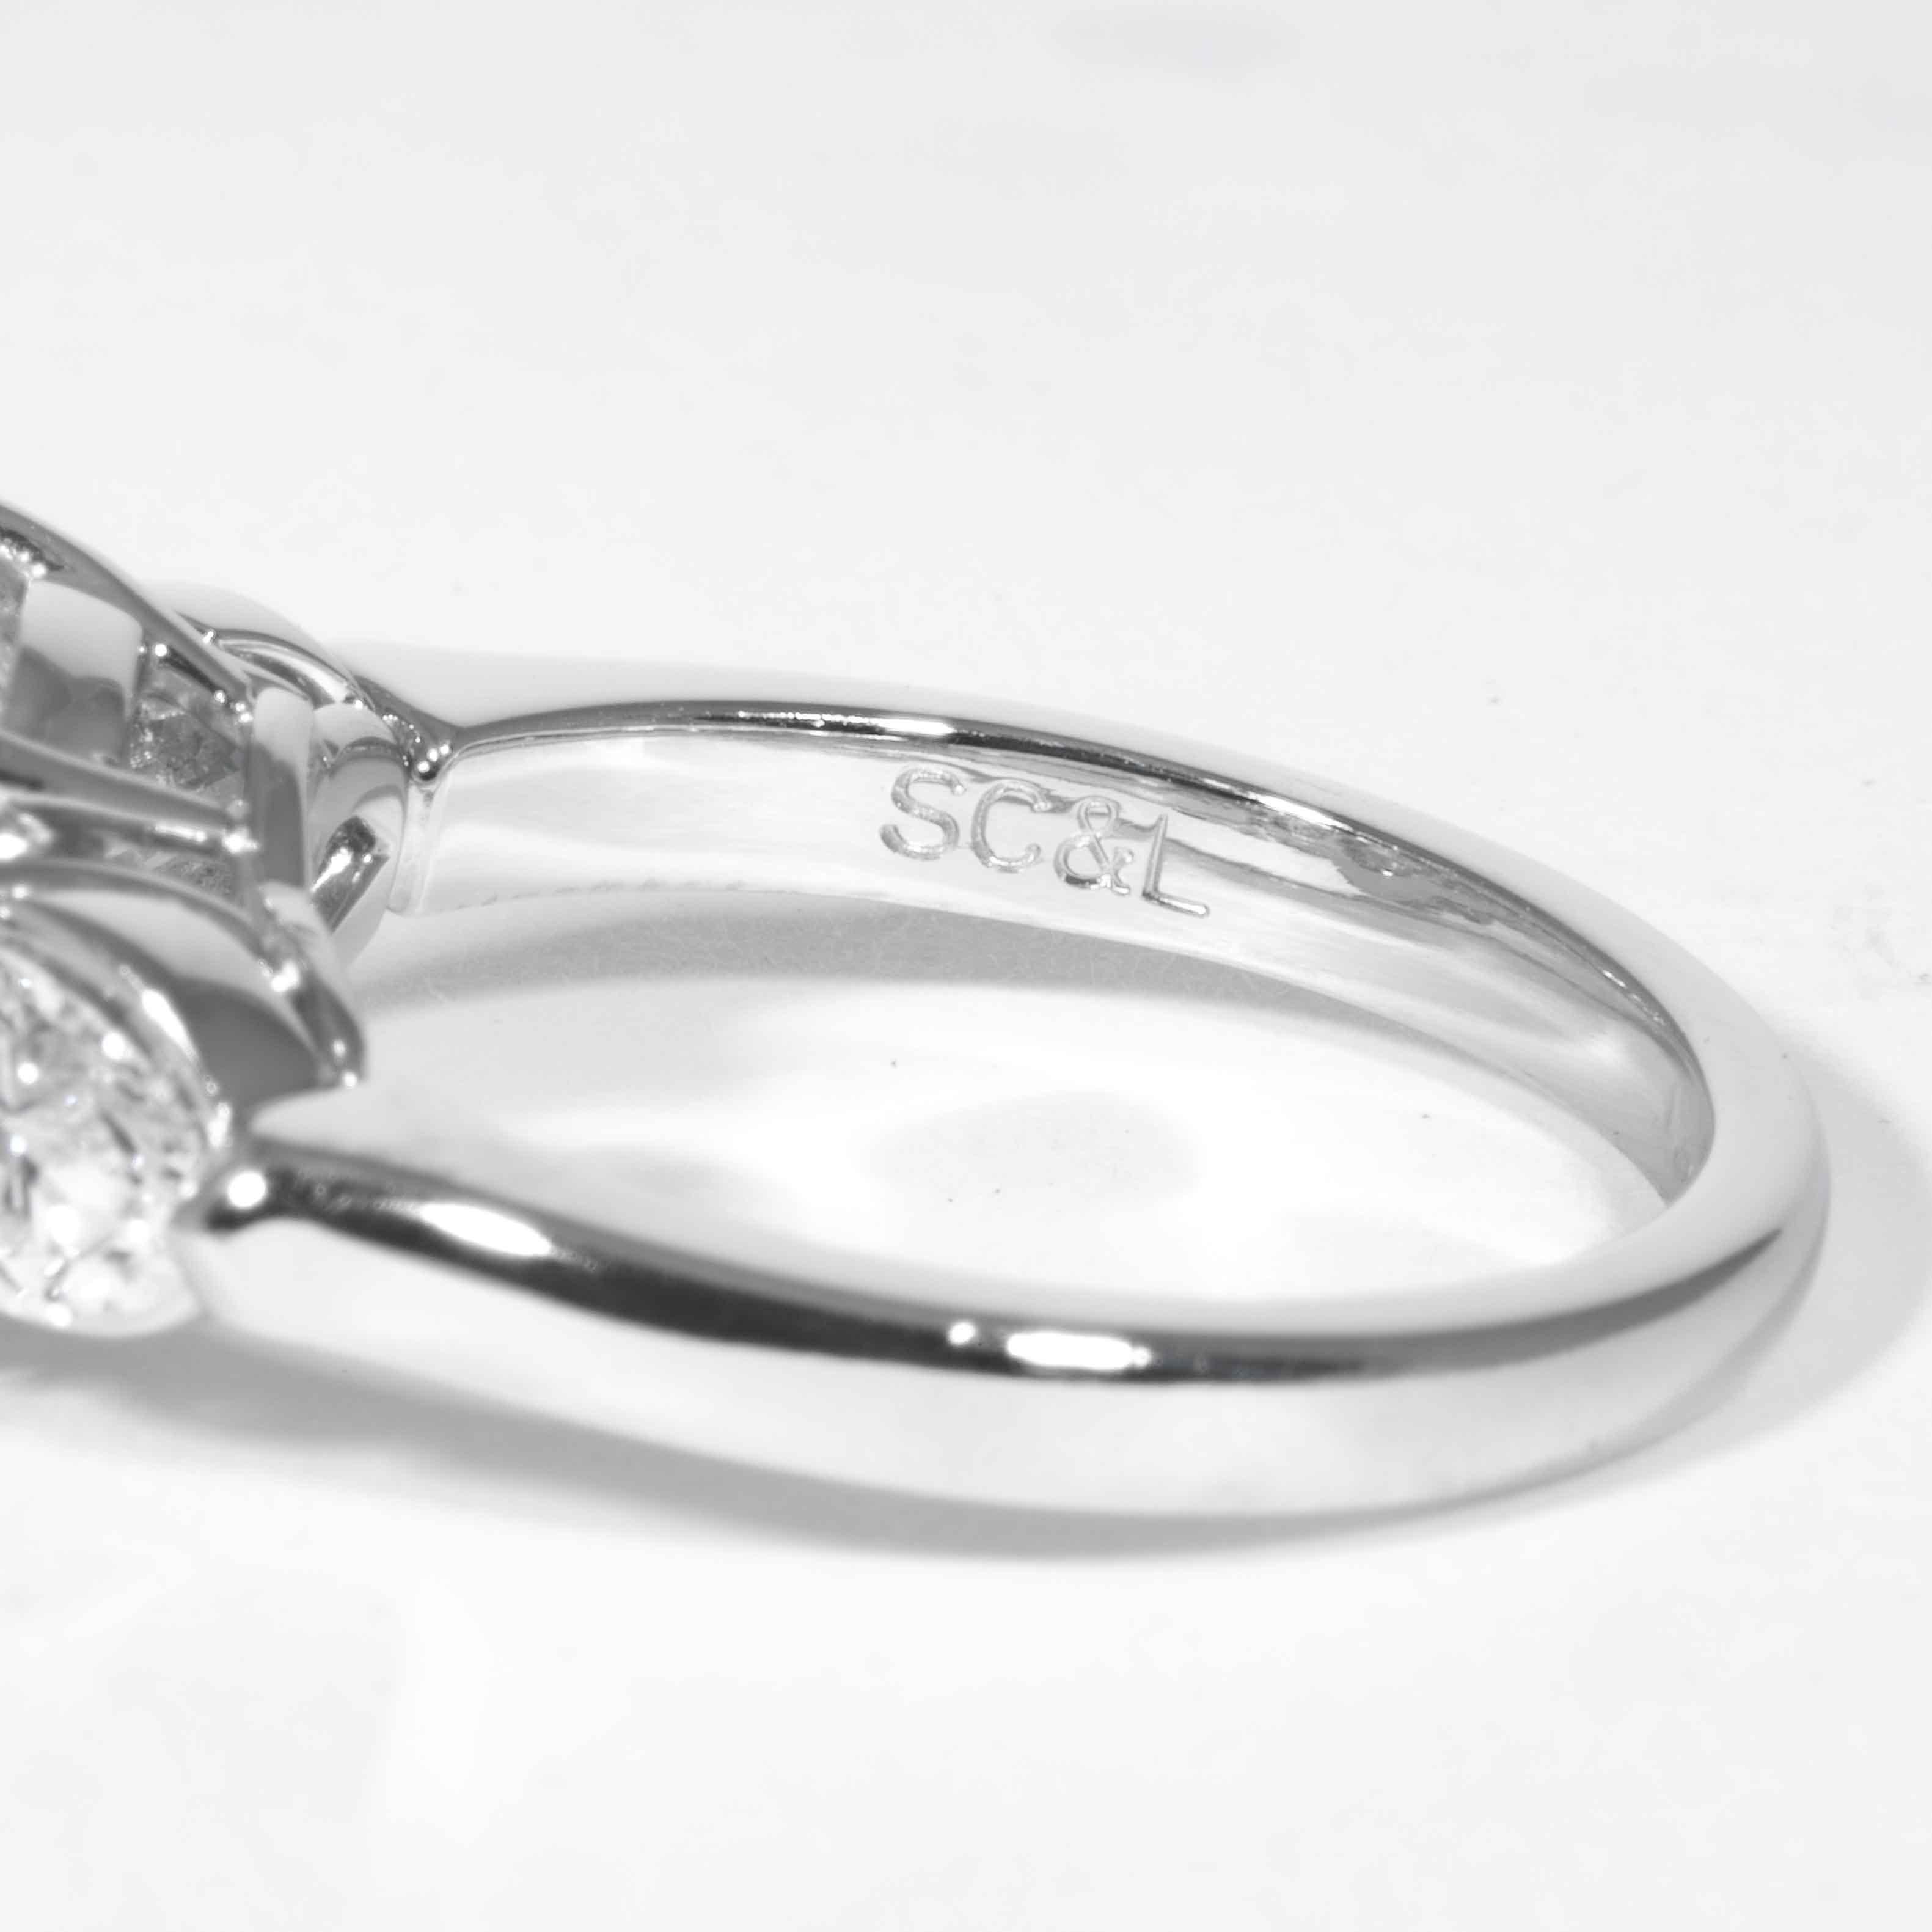 Shreve, Crump & Low GIA Certified 3.23 Carat E VVS2 Round Brilliant Diamond Ring For Sale 2